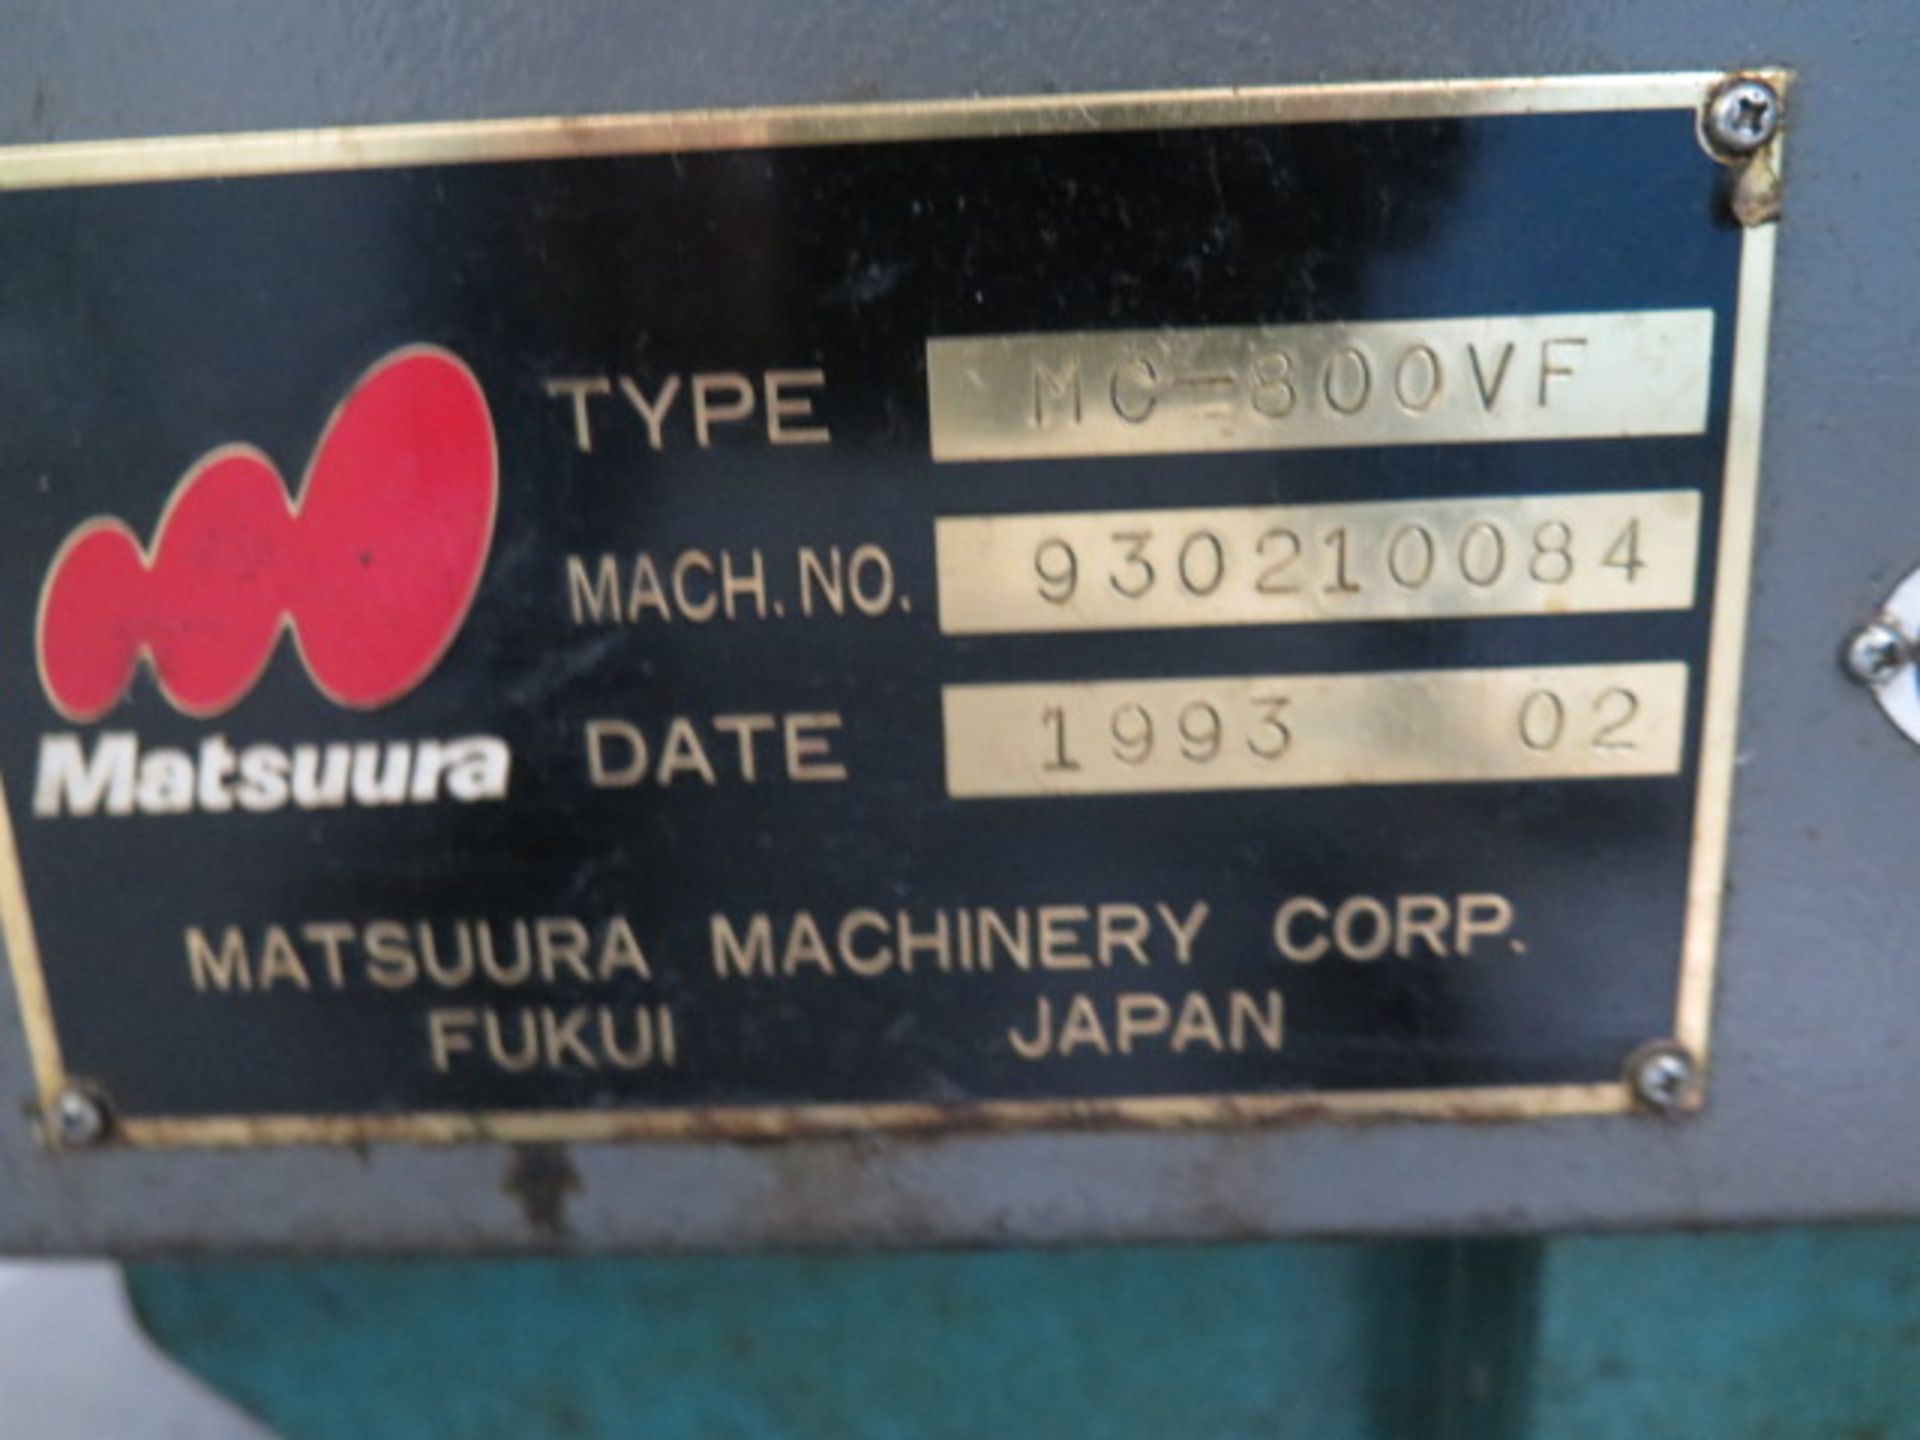 1993 Matsuura MC-800VF CNC Vertical Machining Center s/n 930210084 w/ Yasnac i-80 Controls, 30-Stat - Image 21 of 22